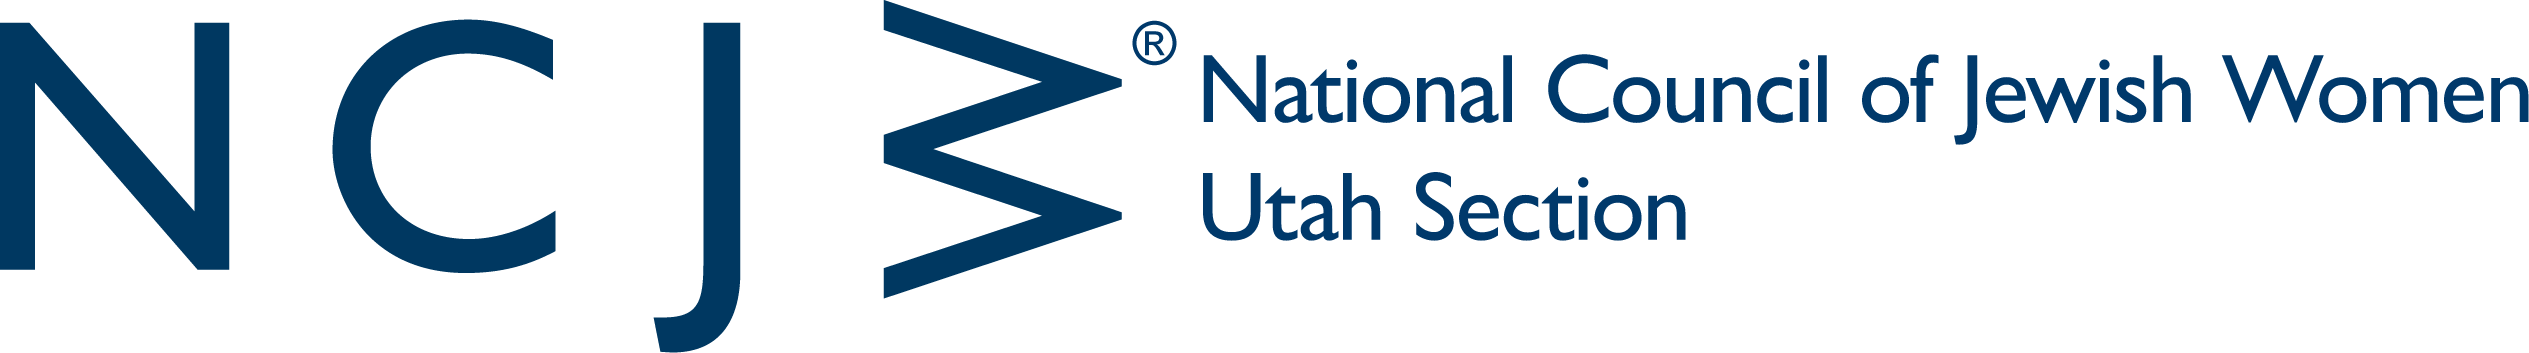 NCJW Utah Section